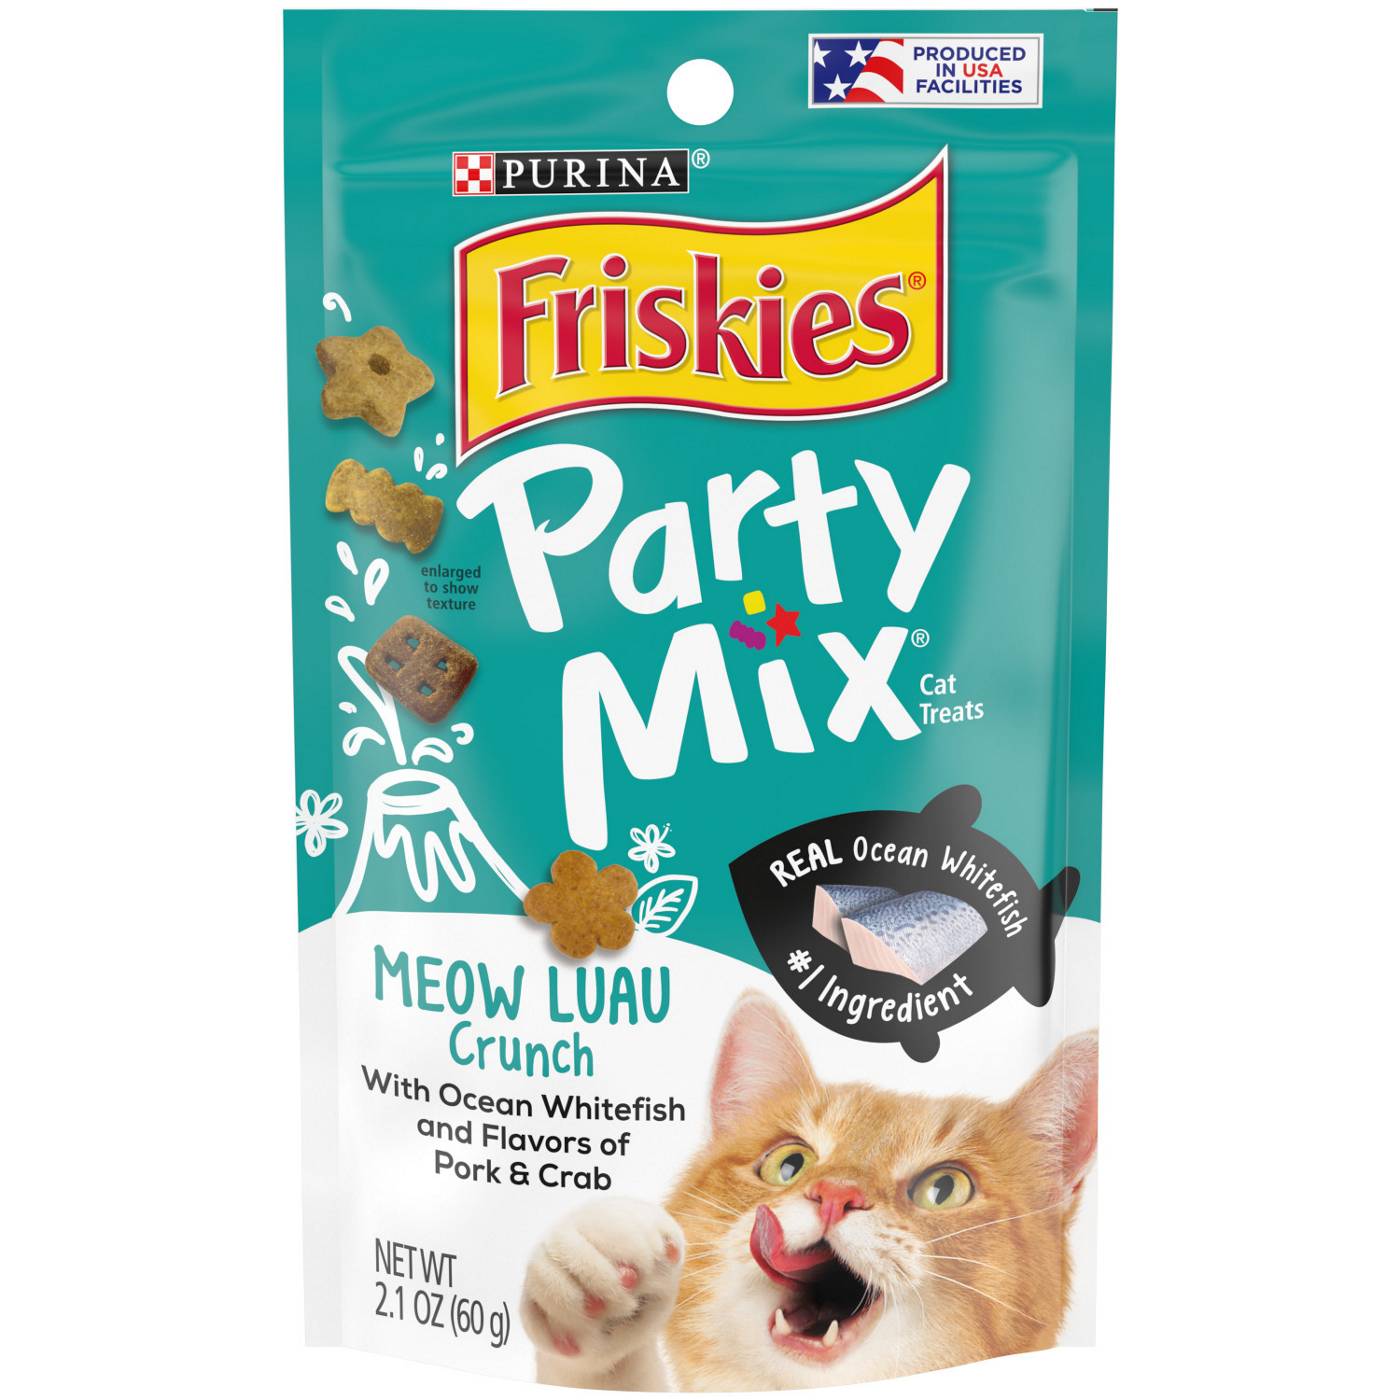 Friskies Cat Treats, Party Mix Meow Luau Crunch; image 1 of 9